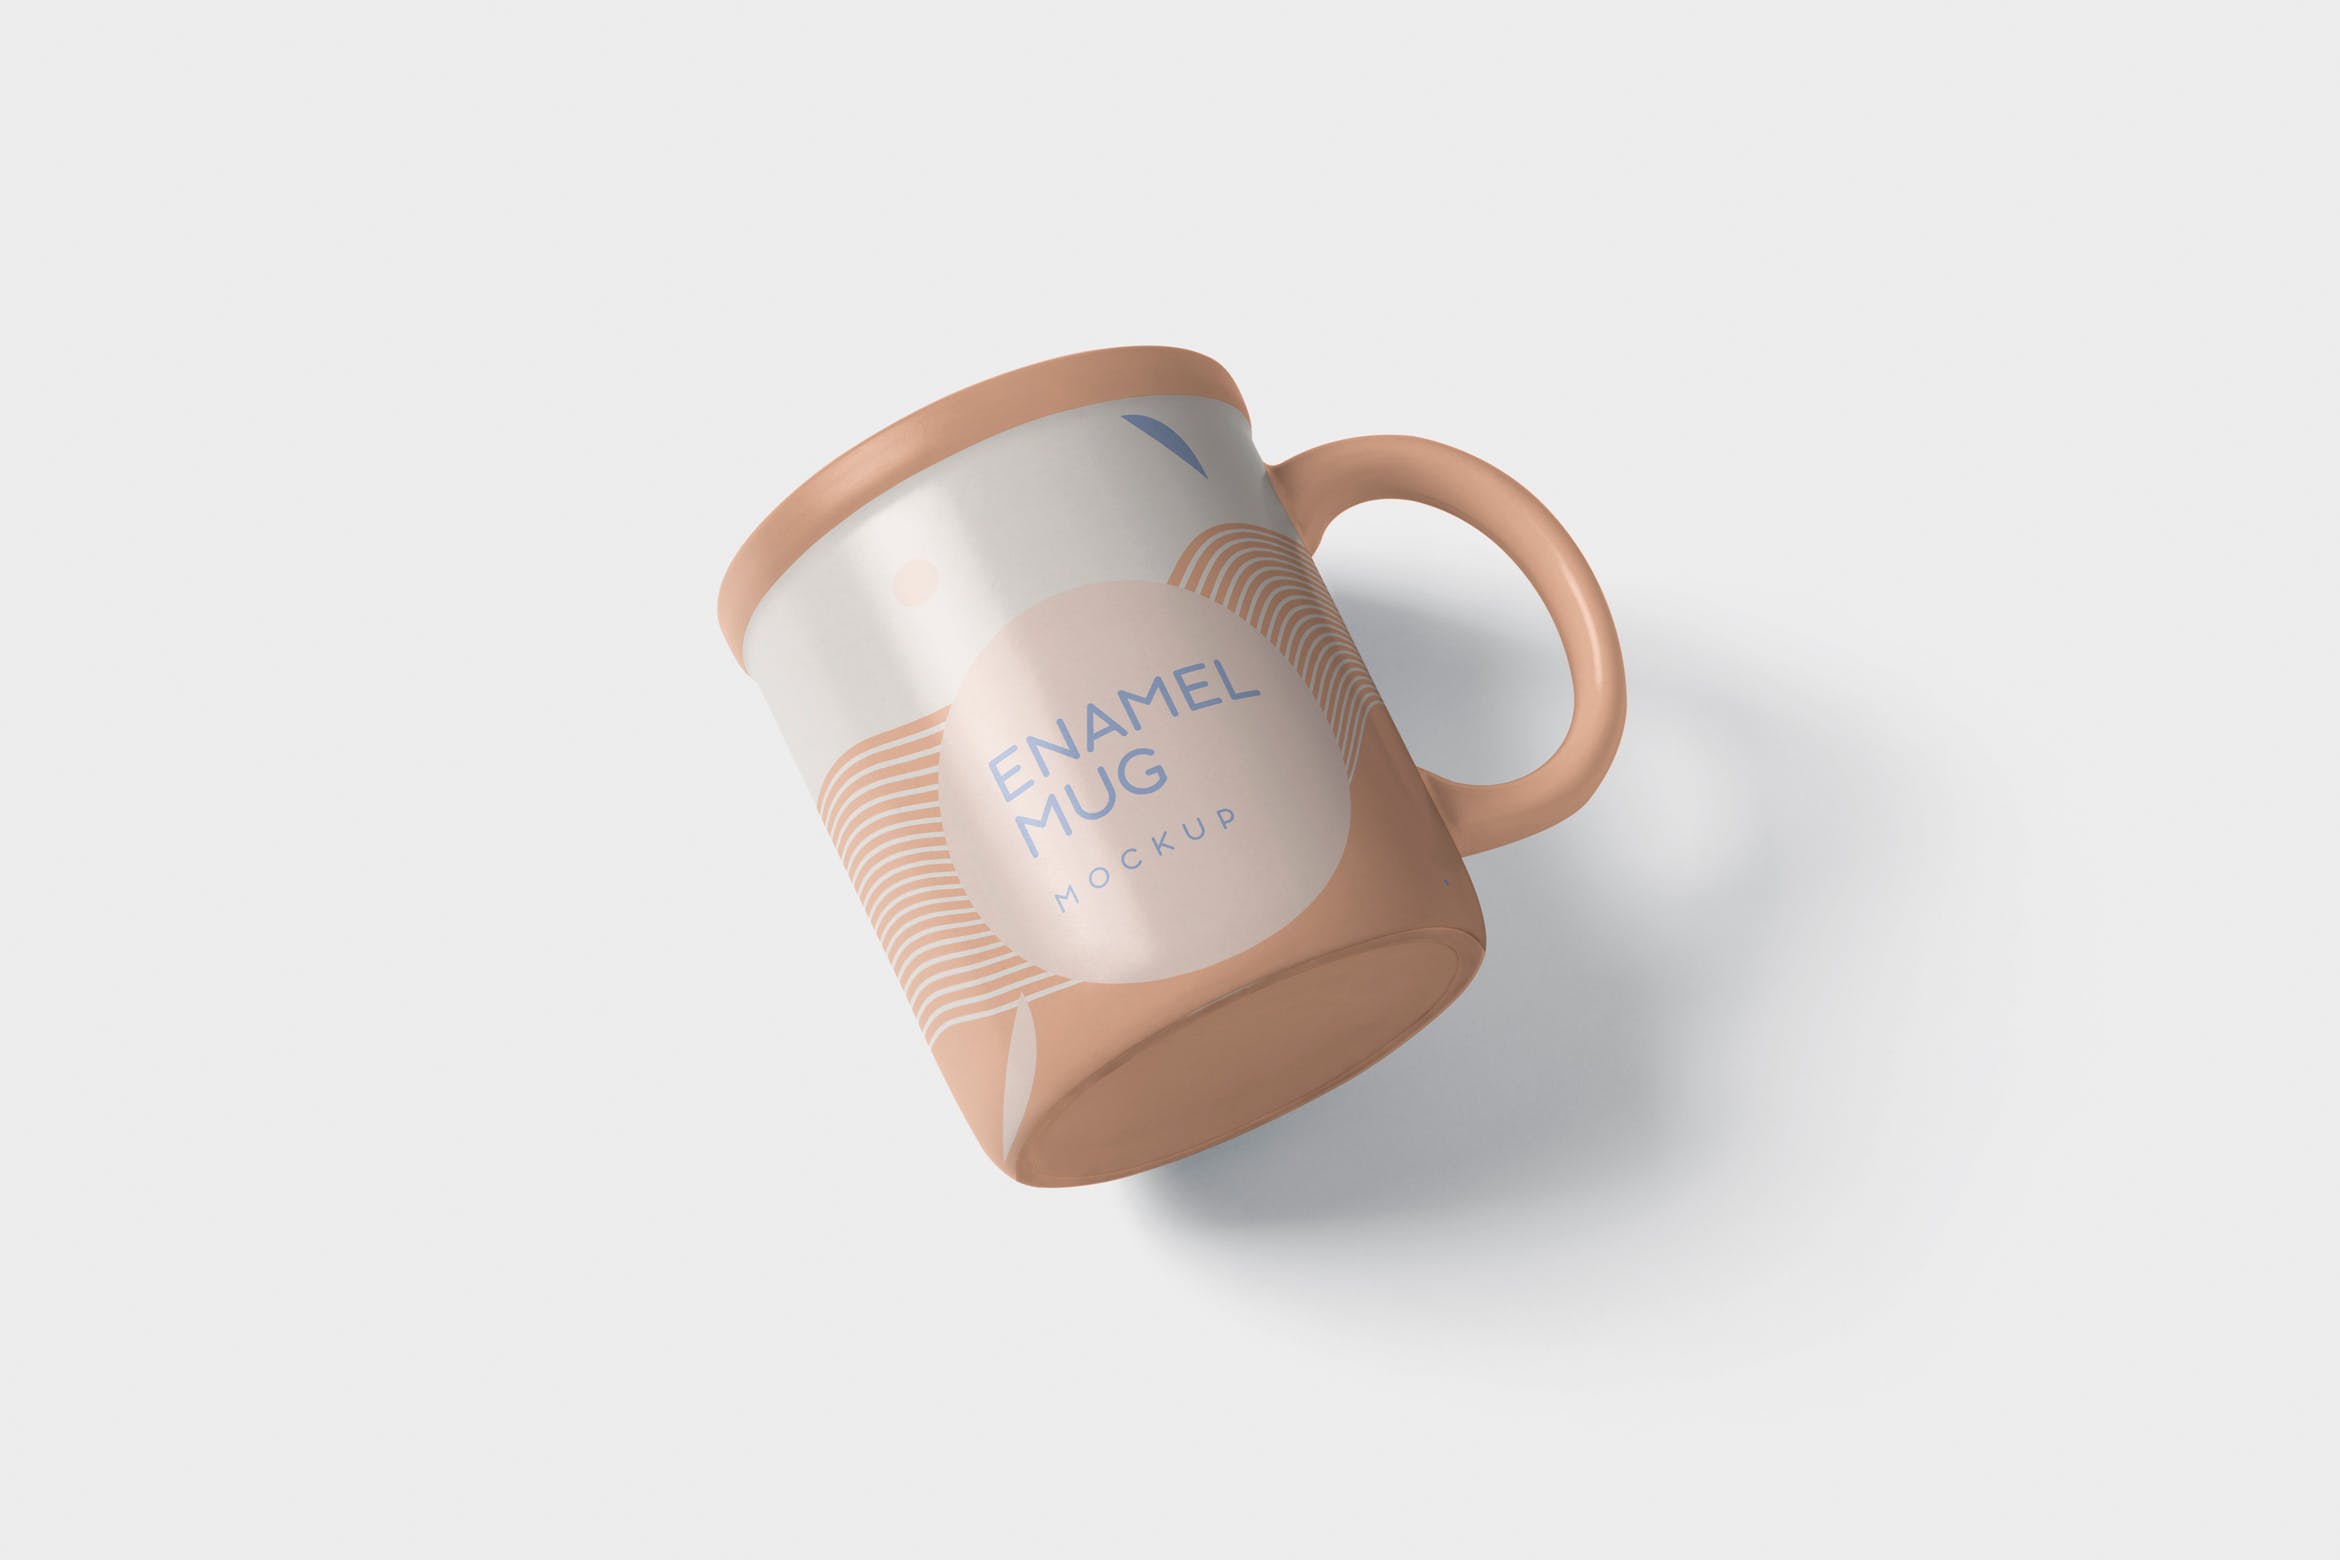 带把手圆形搪瓷杯马克杯图案设计第一素材精选 Round Enamel Mug Mockup With Handle插图